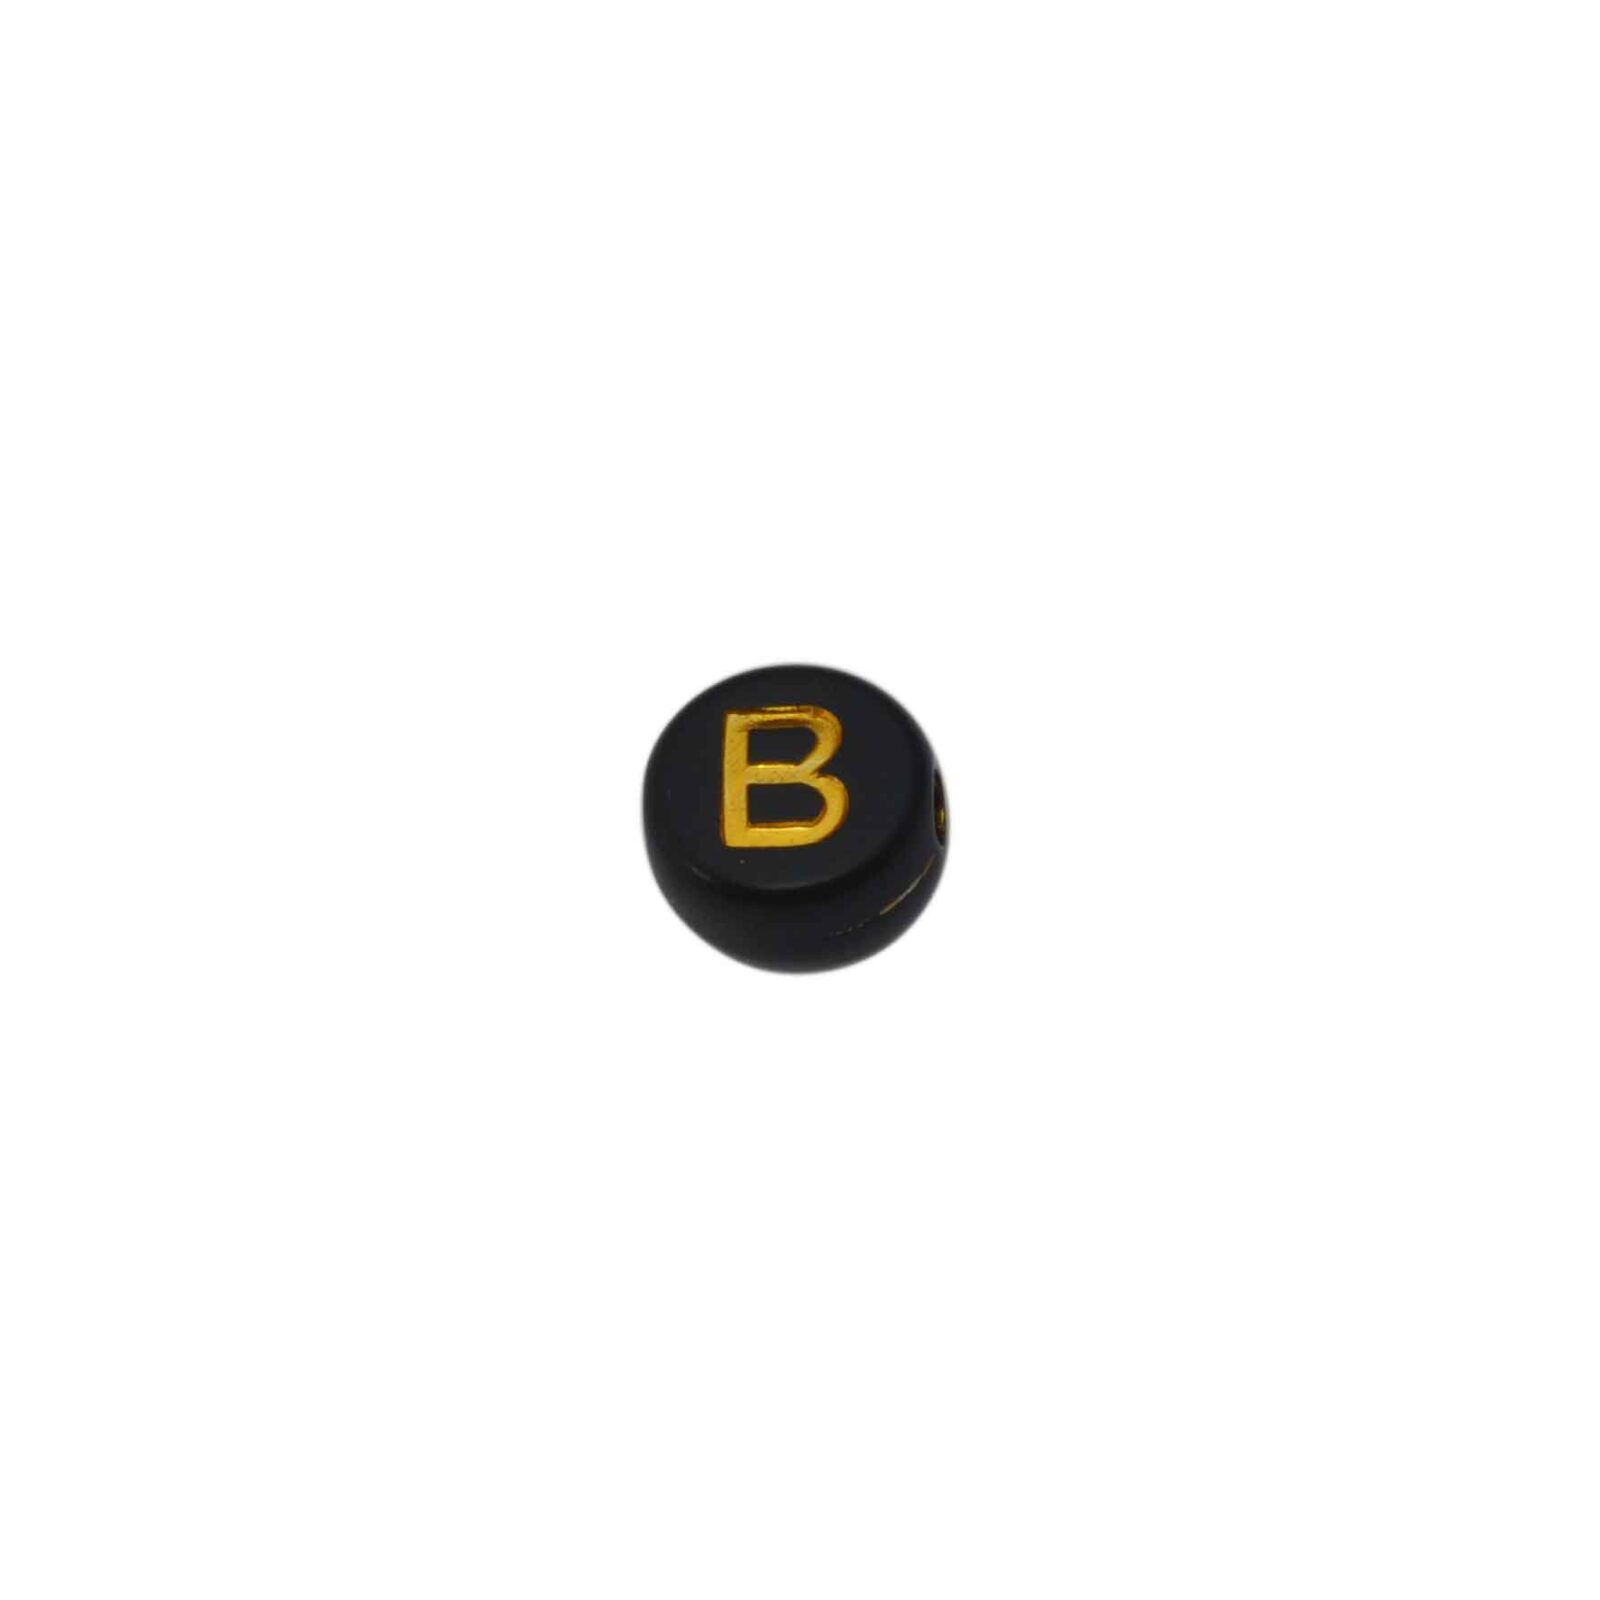 Zwarte ronde letterkraal B